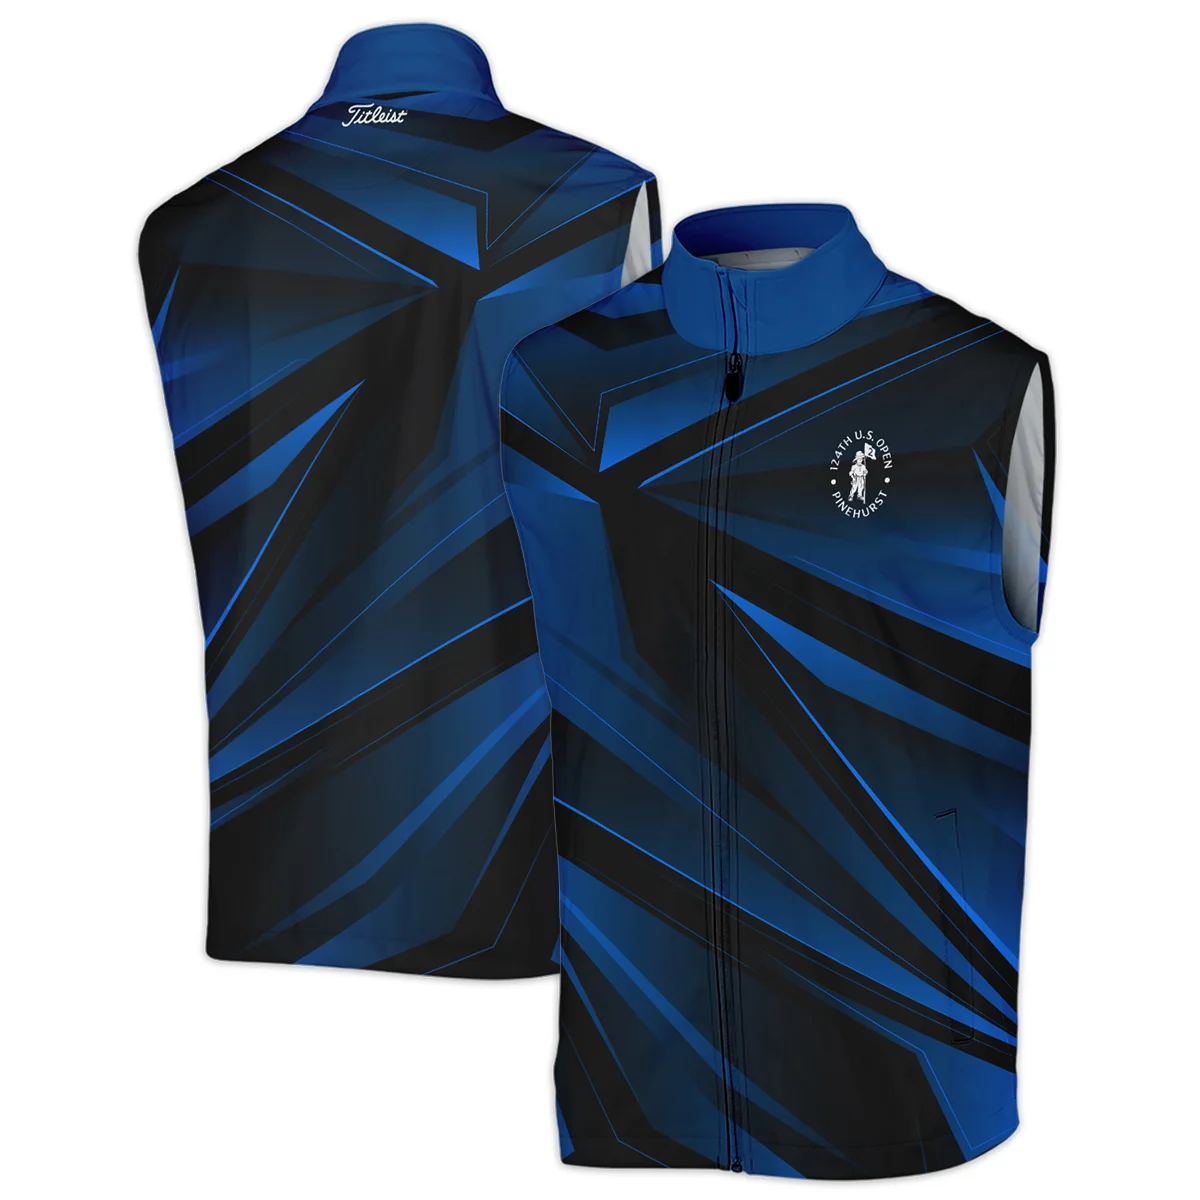 Titleist 124th U.S. Open Pinehurst Dark Blue Gradient Sublimation Hoodie Shirt Style Classic